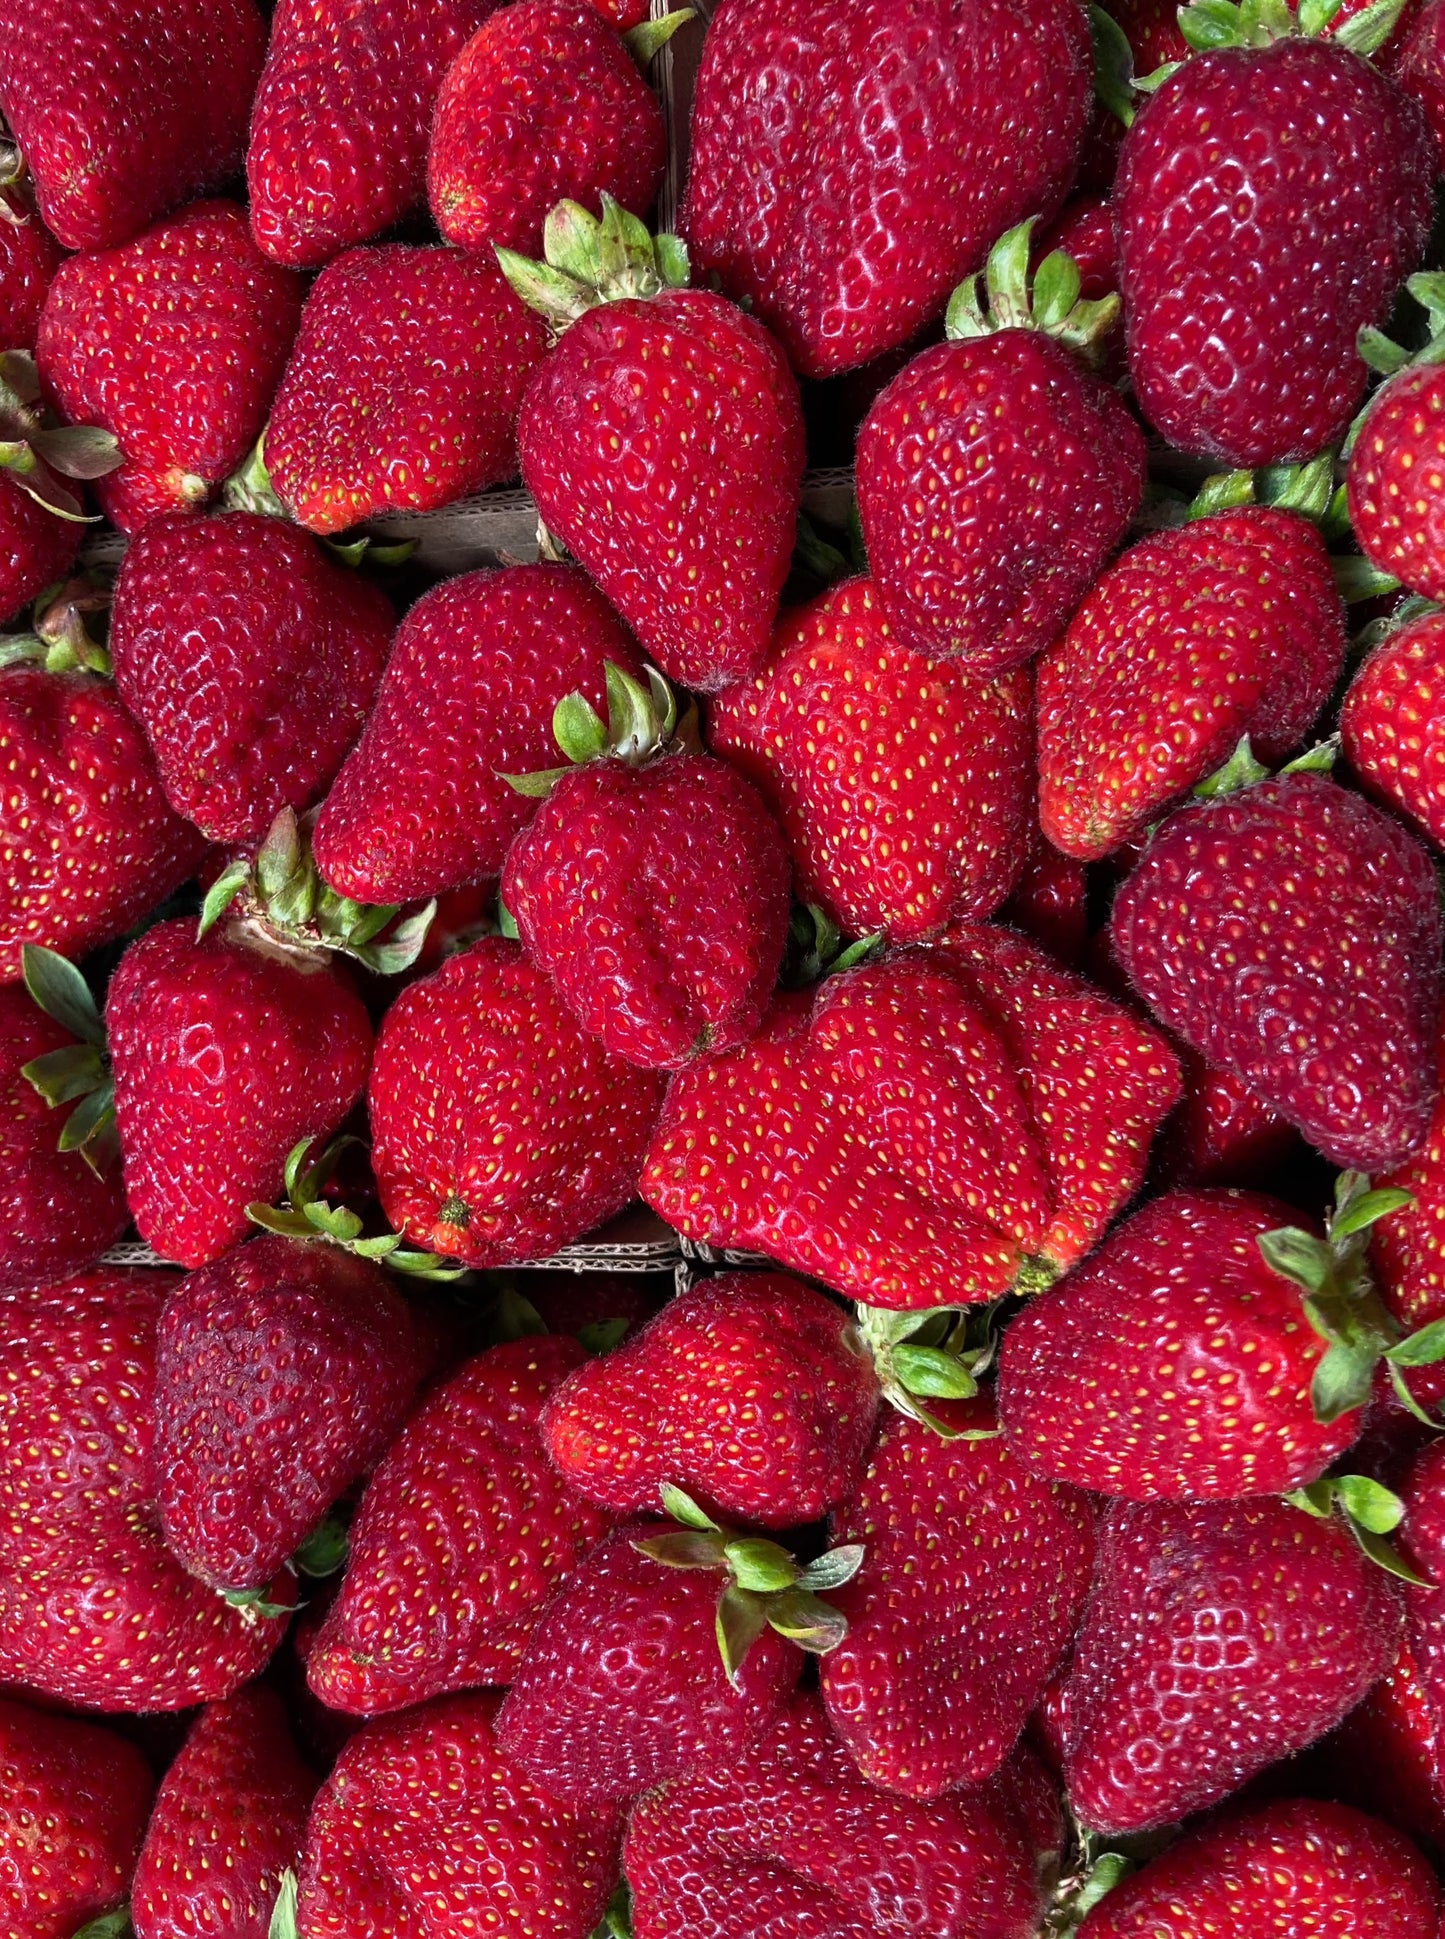 Flat of Organic Chandler Strawberries